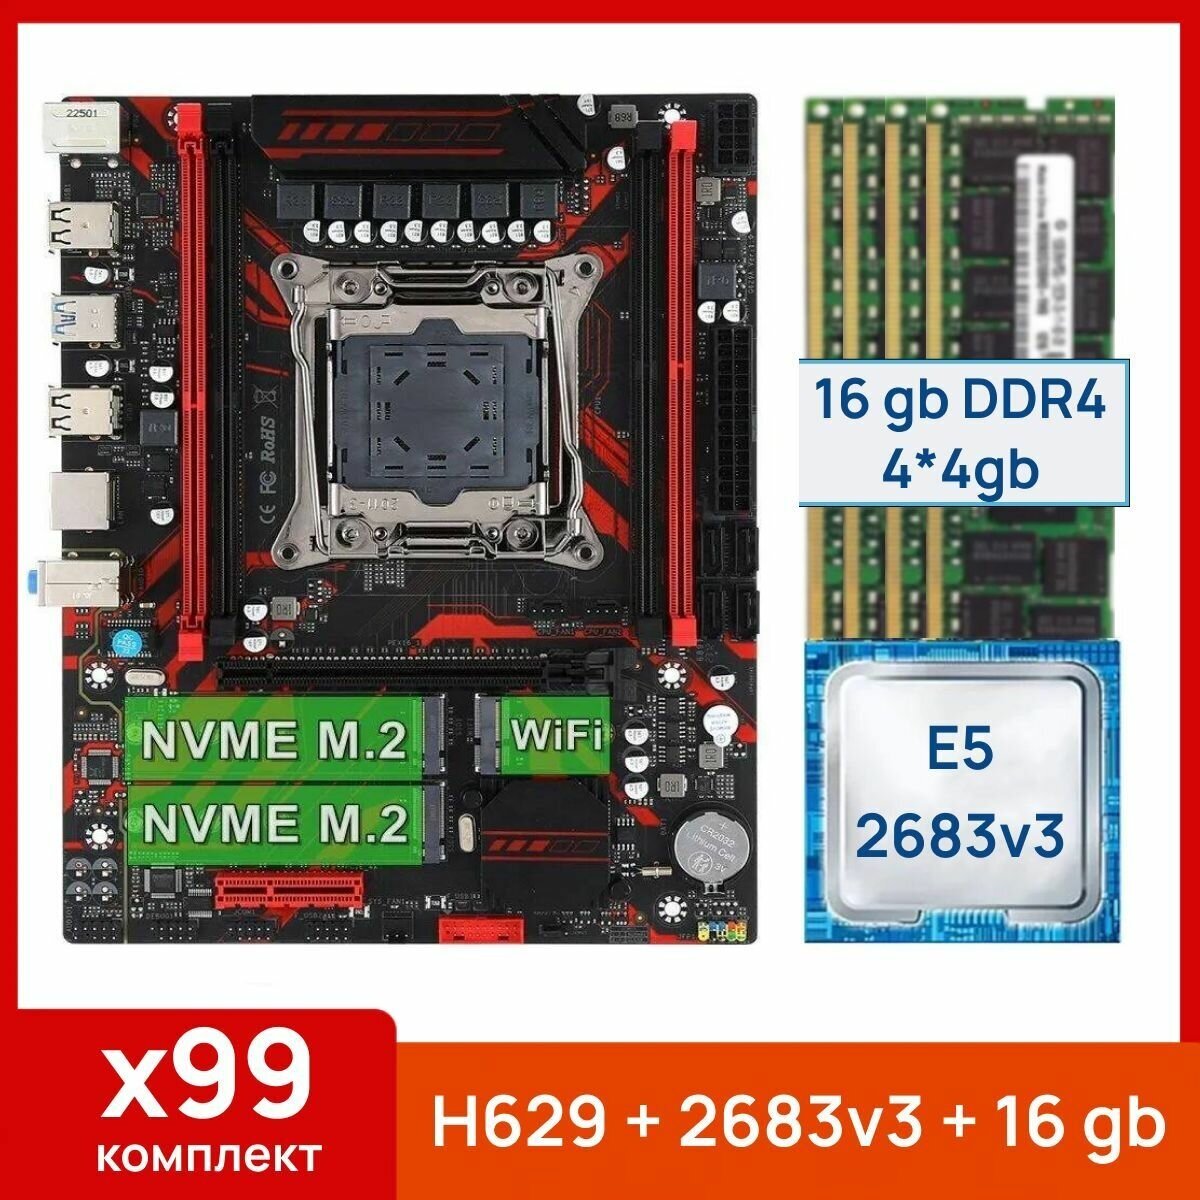 Комплект: Atermiter X99 H629 + Xeon E5 2683v3 + 16 gb(4x4gb) DDR4 ecc reg